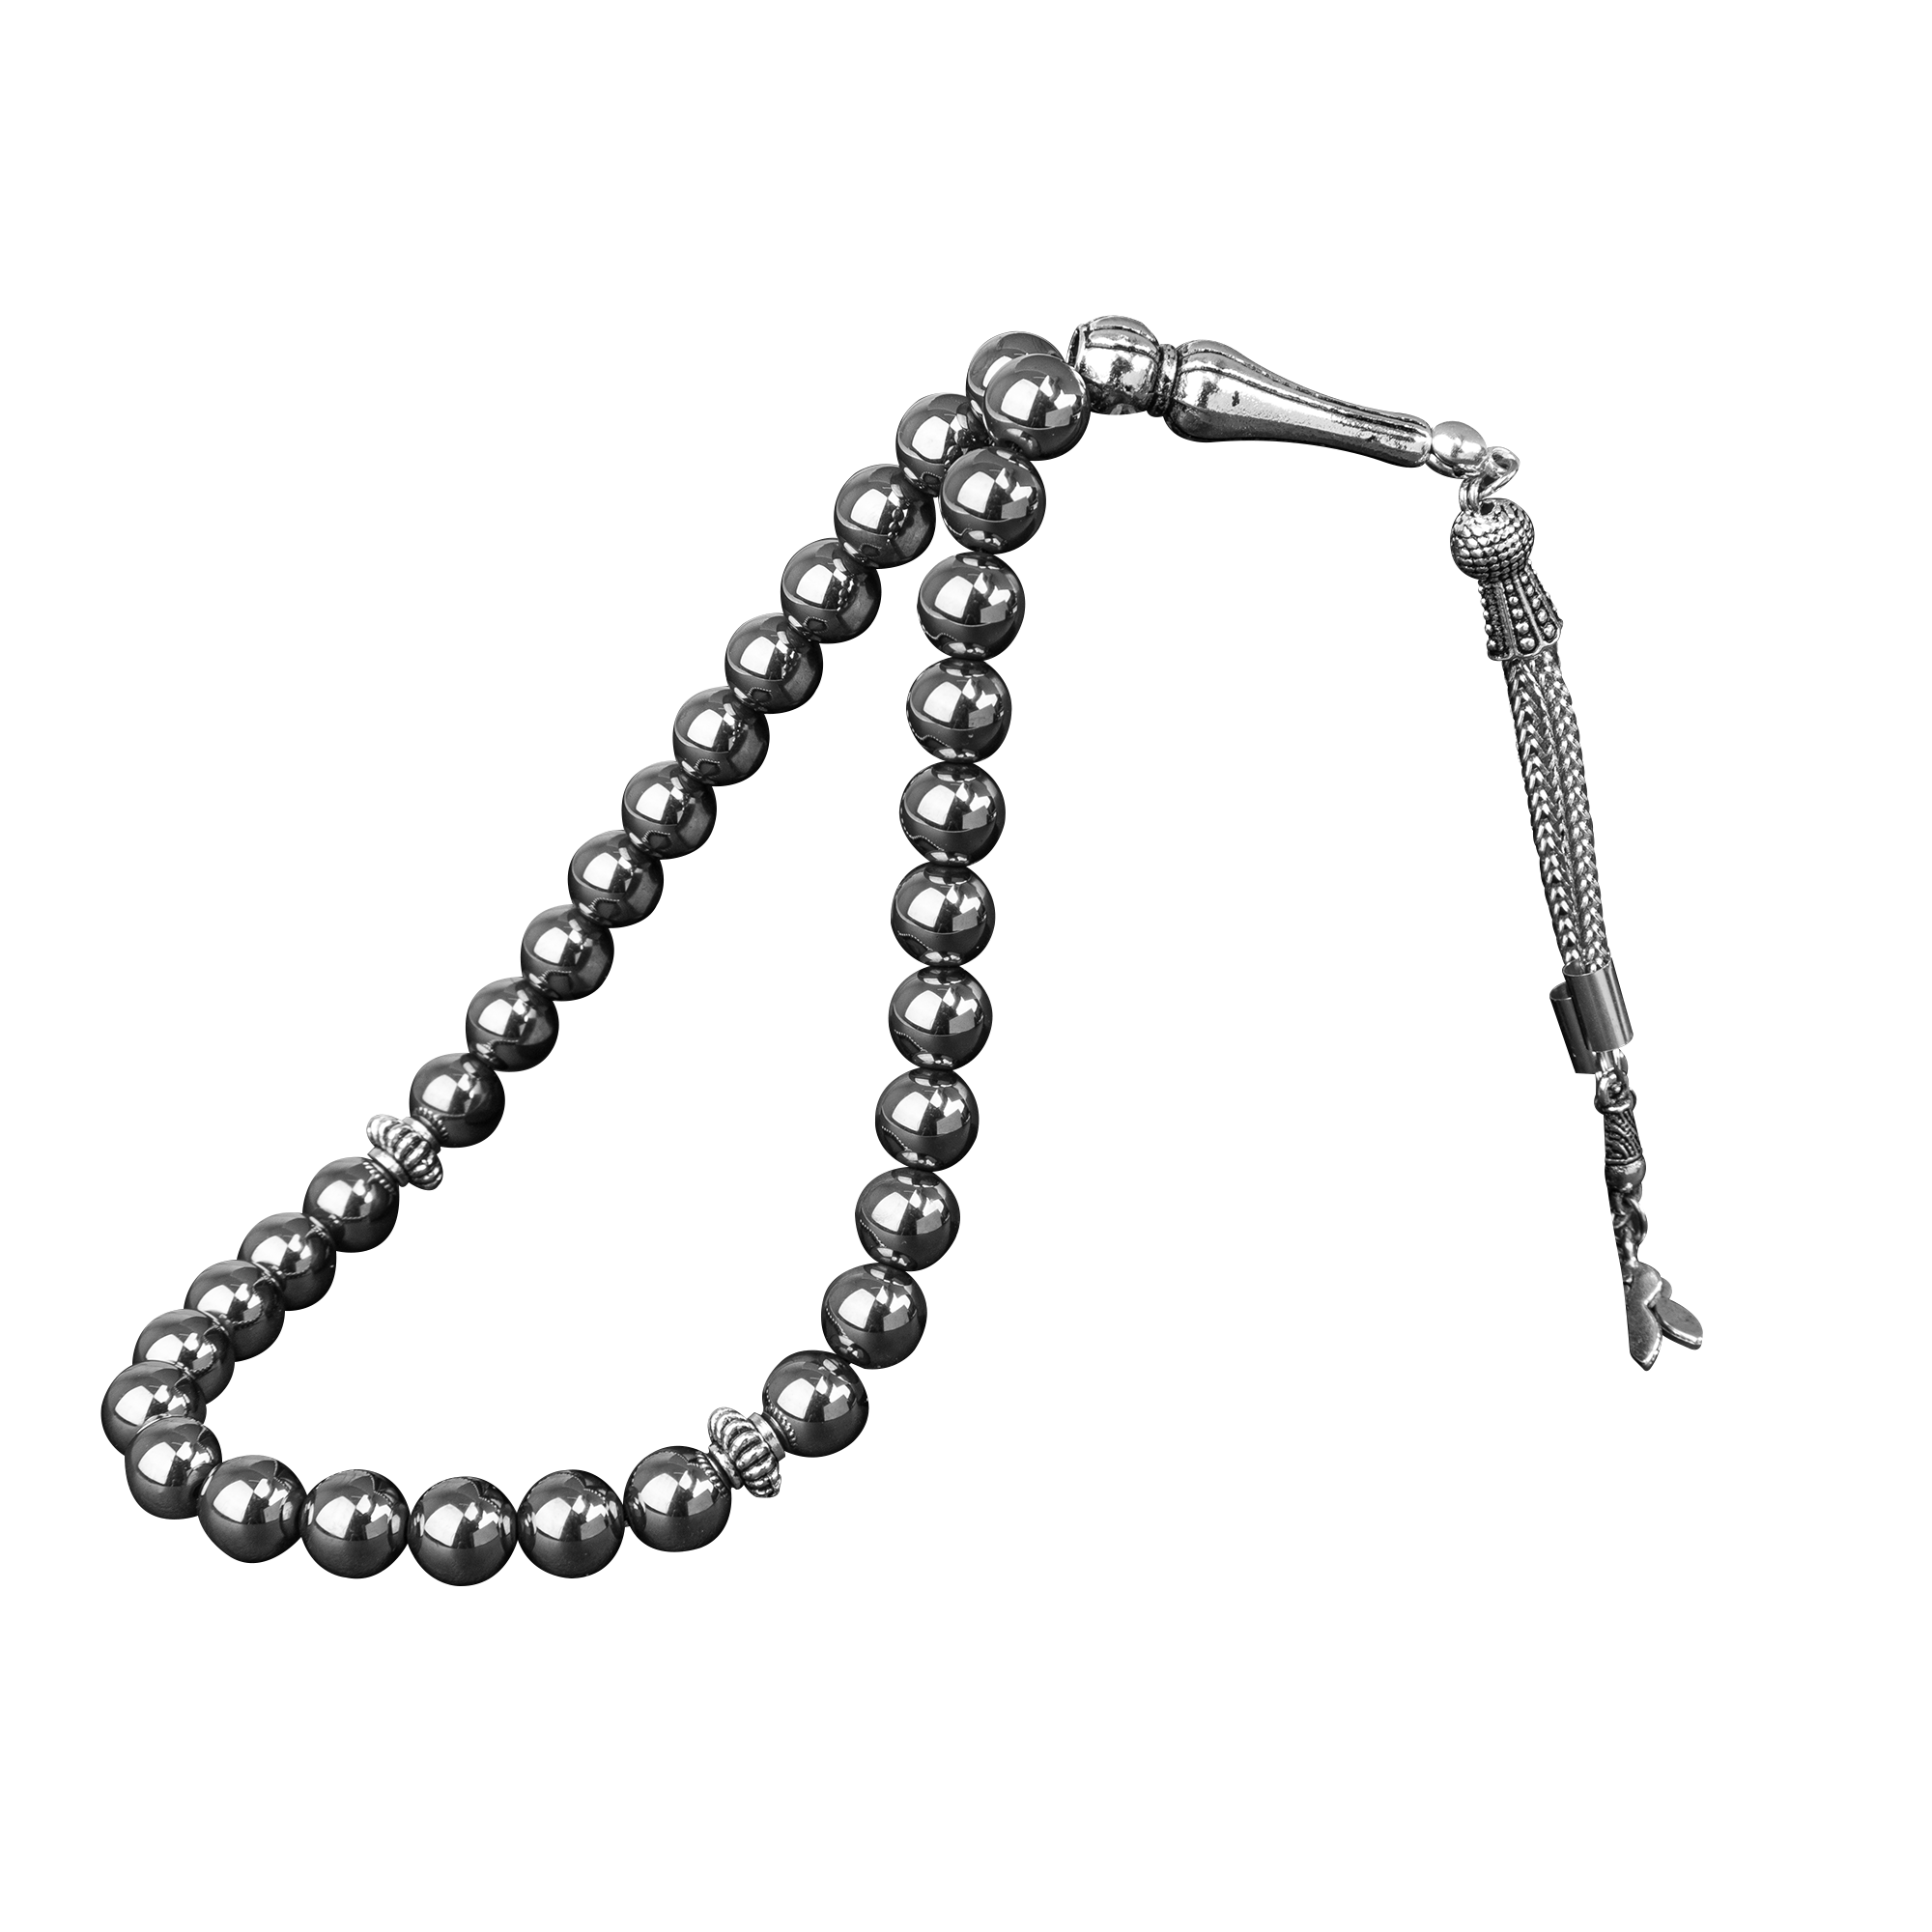 Trehartz Natural Stone Prayer Beads 33 pieces - 8mm